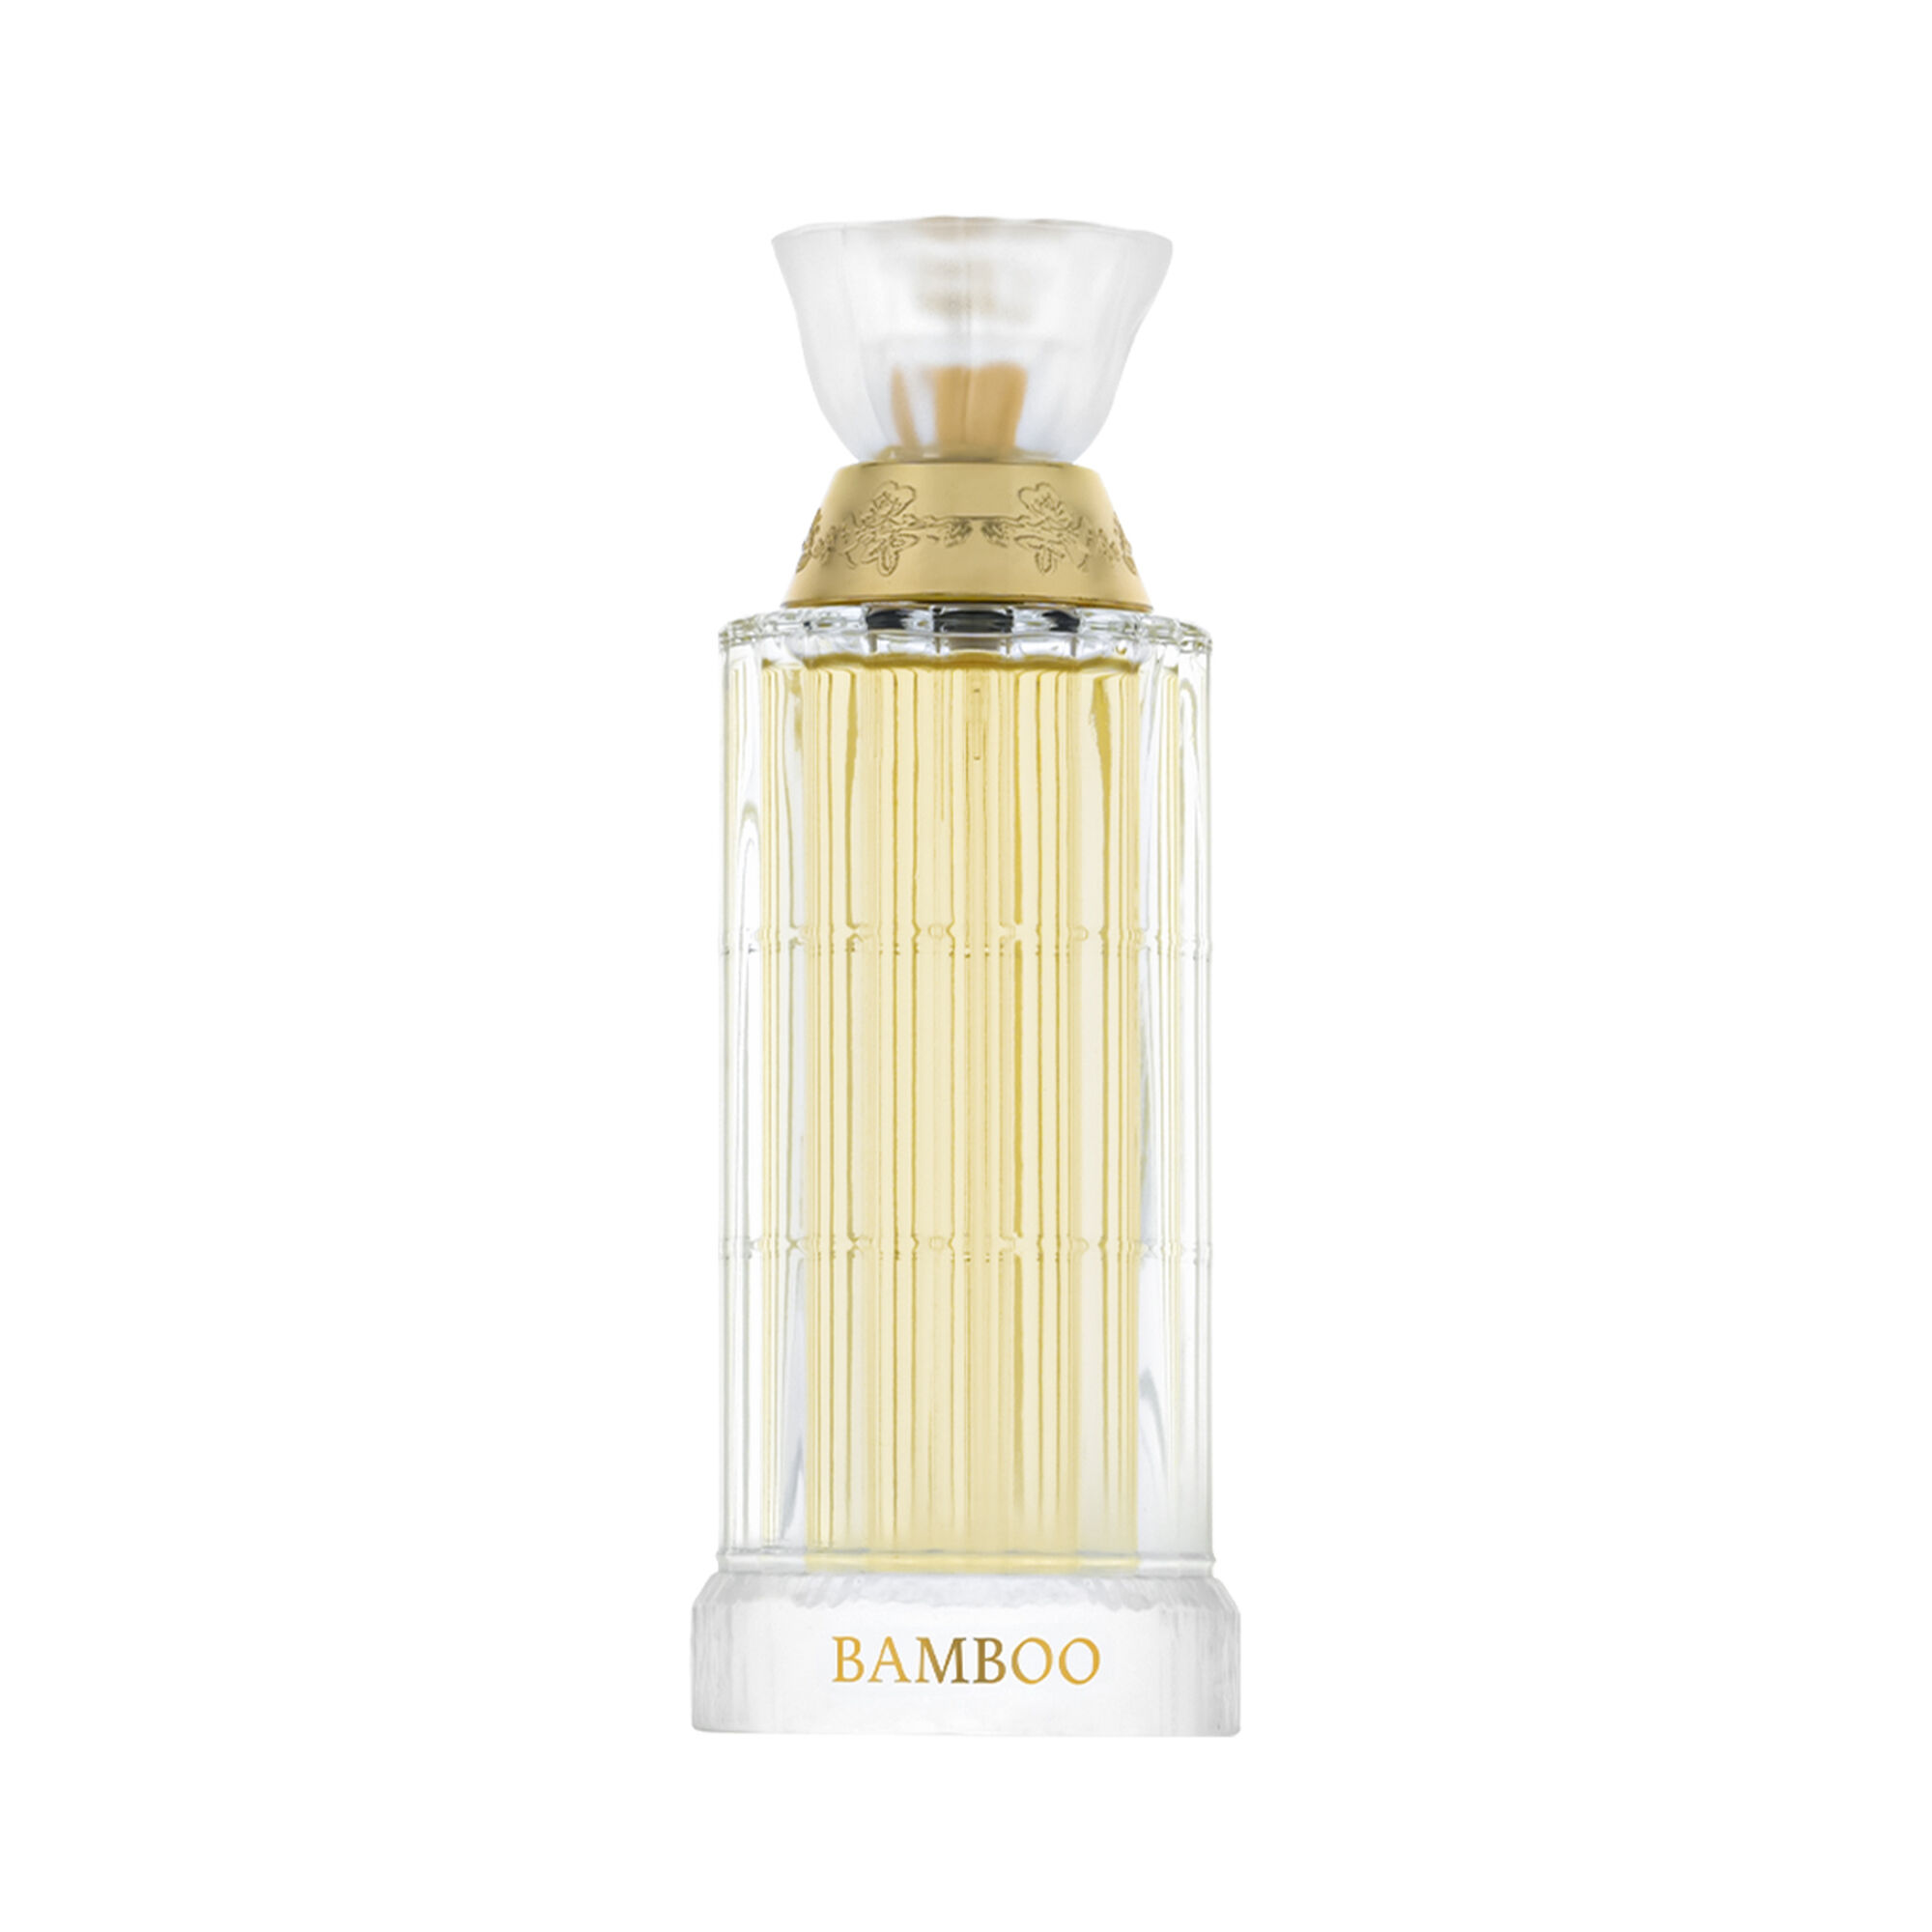 Bamboo Perfume by Maios